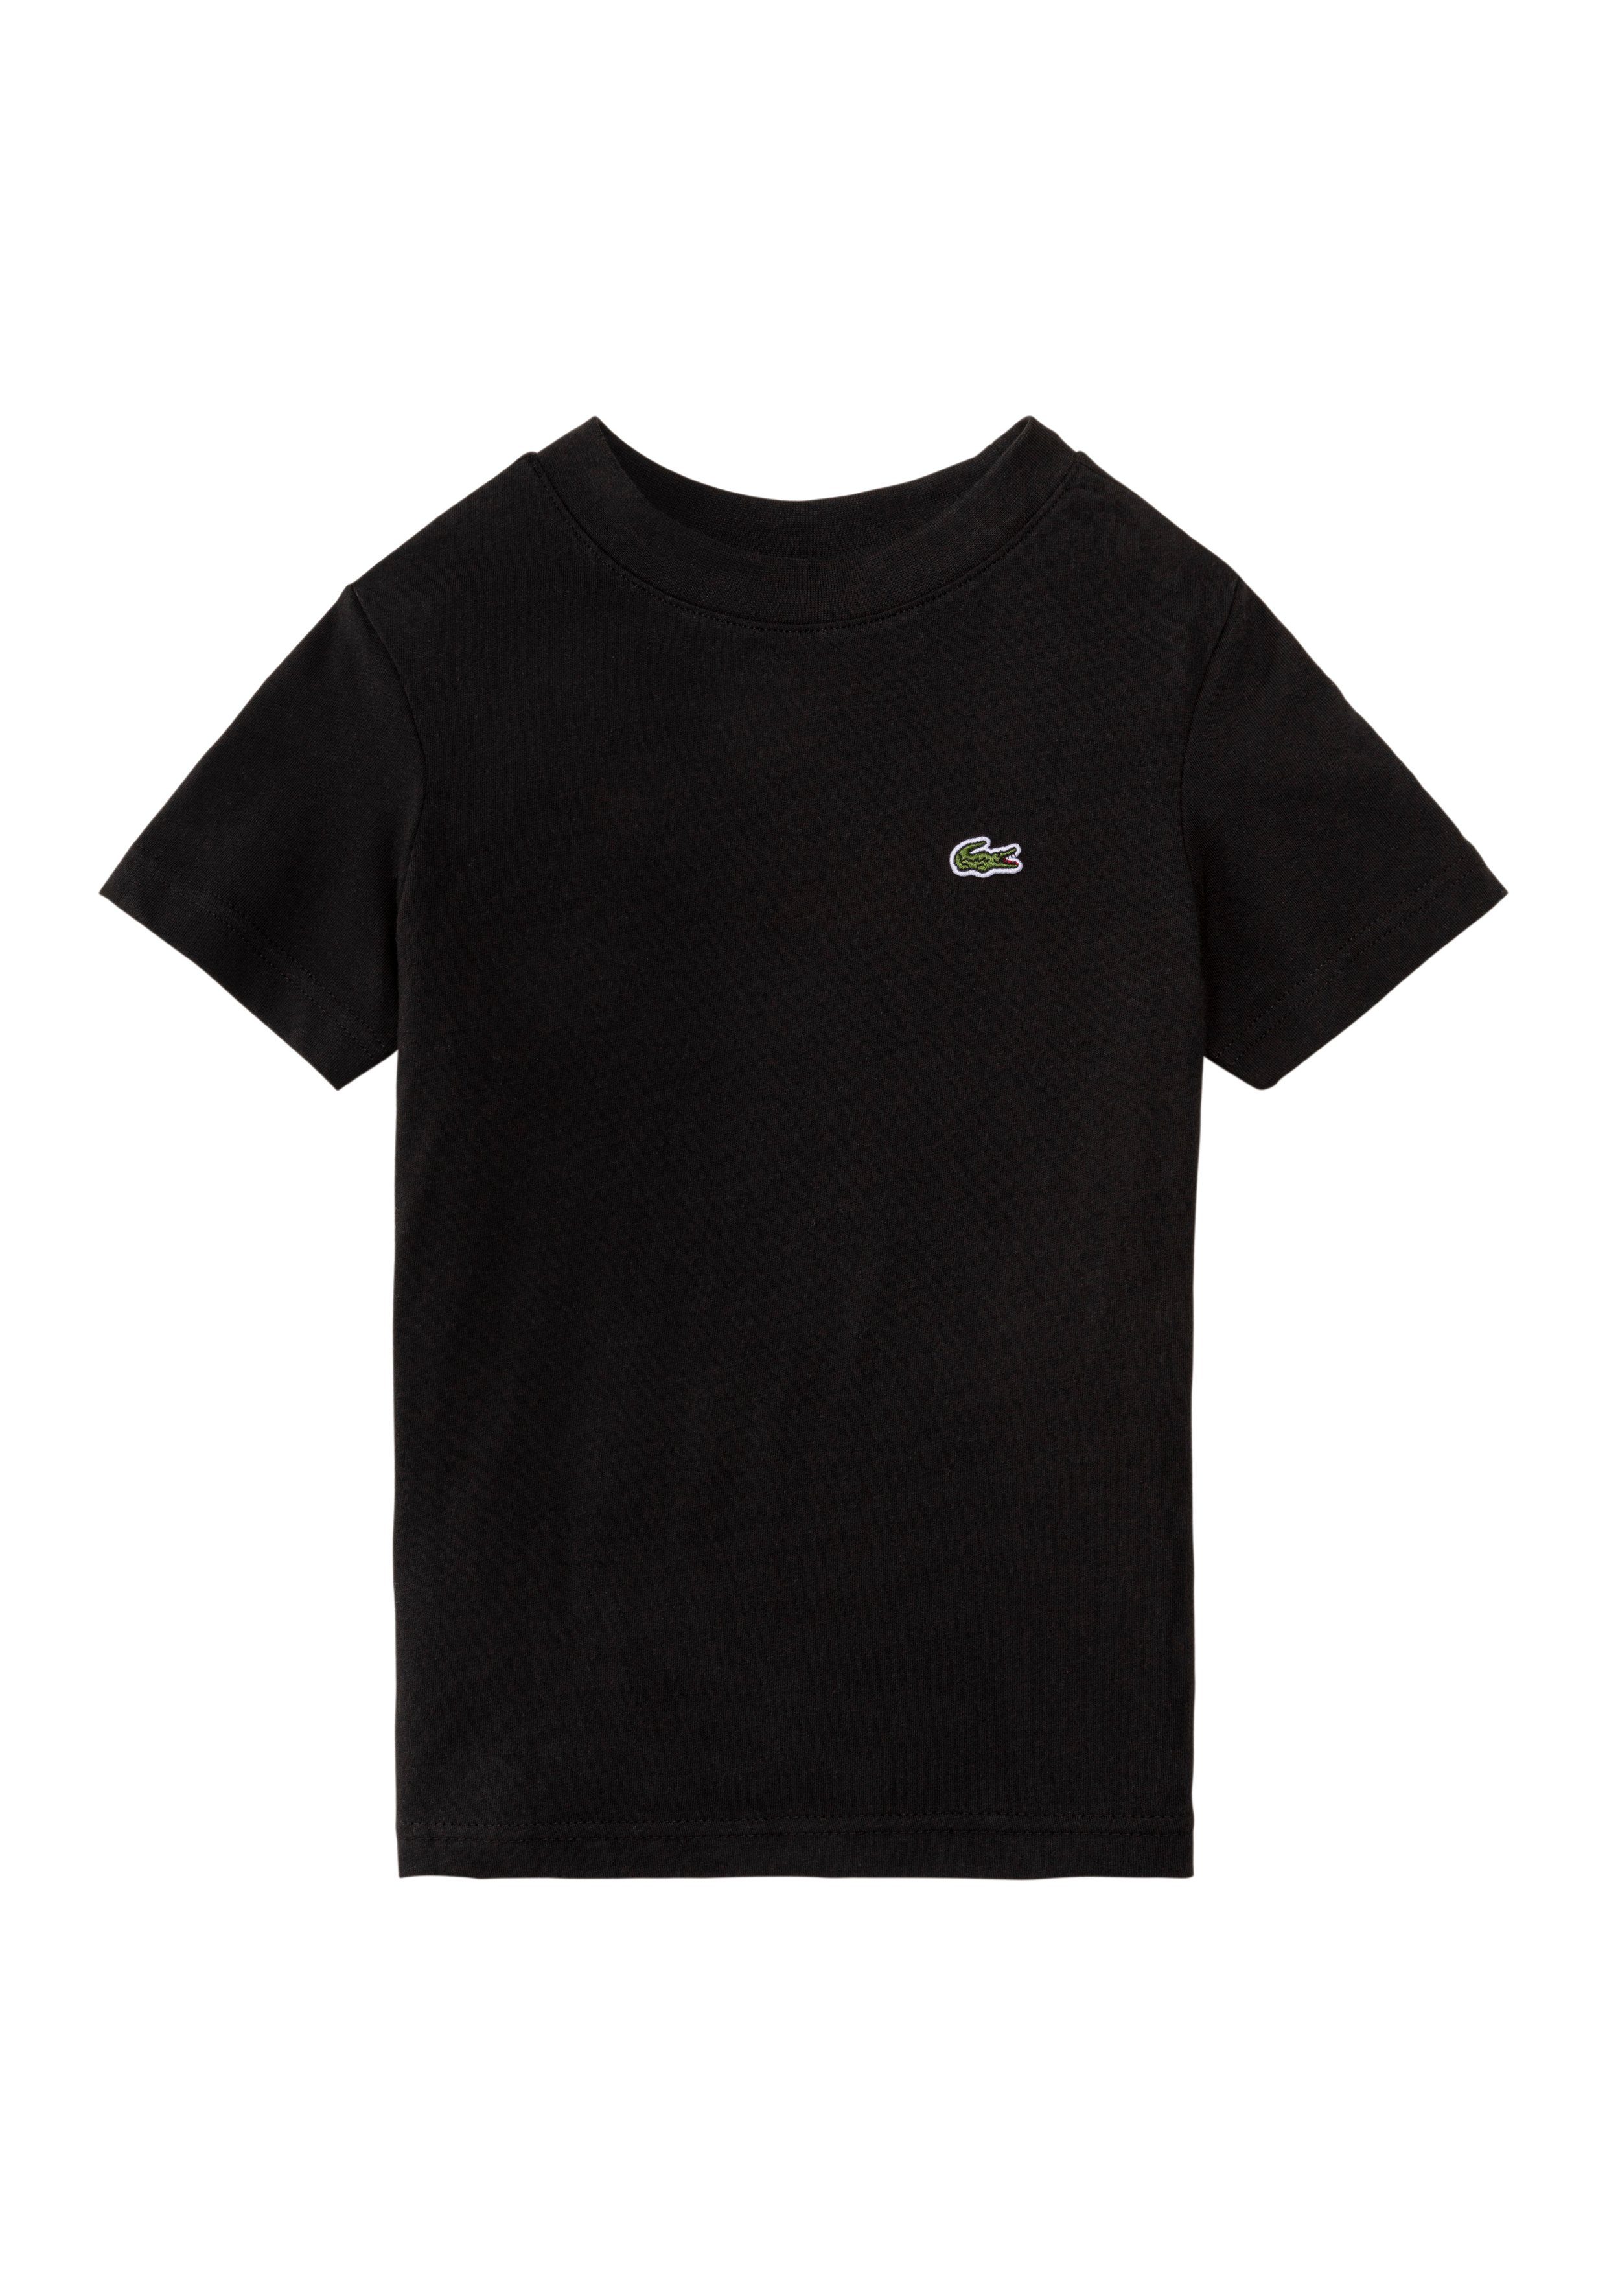 Lacoste T-Shirt mit Brusthöhe schwarz Lacoste-Krokodil auf